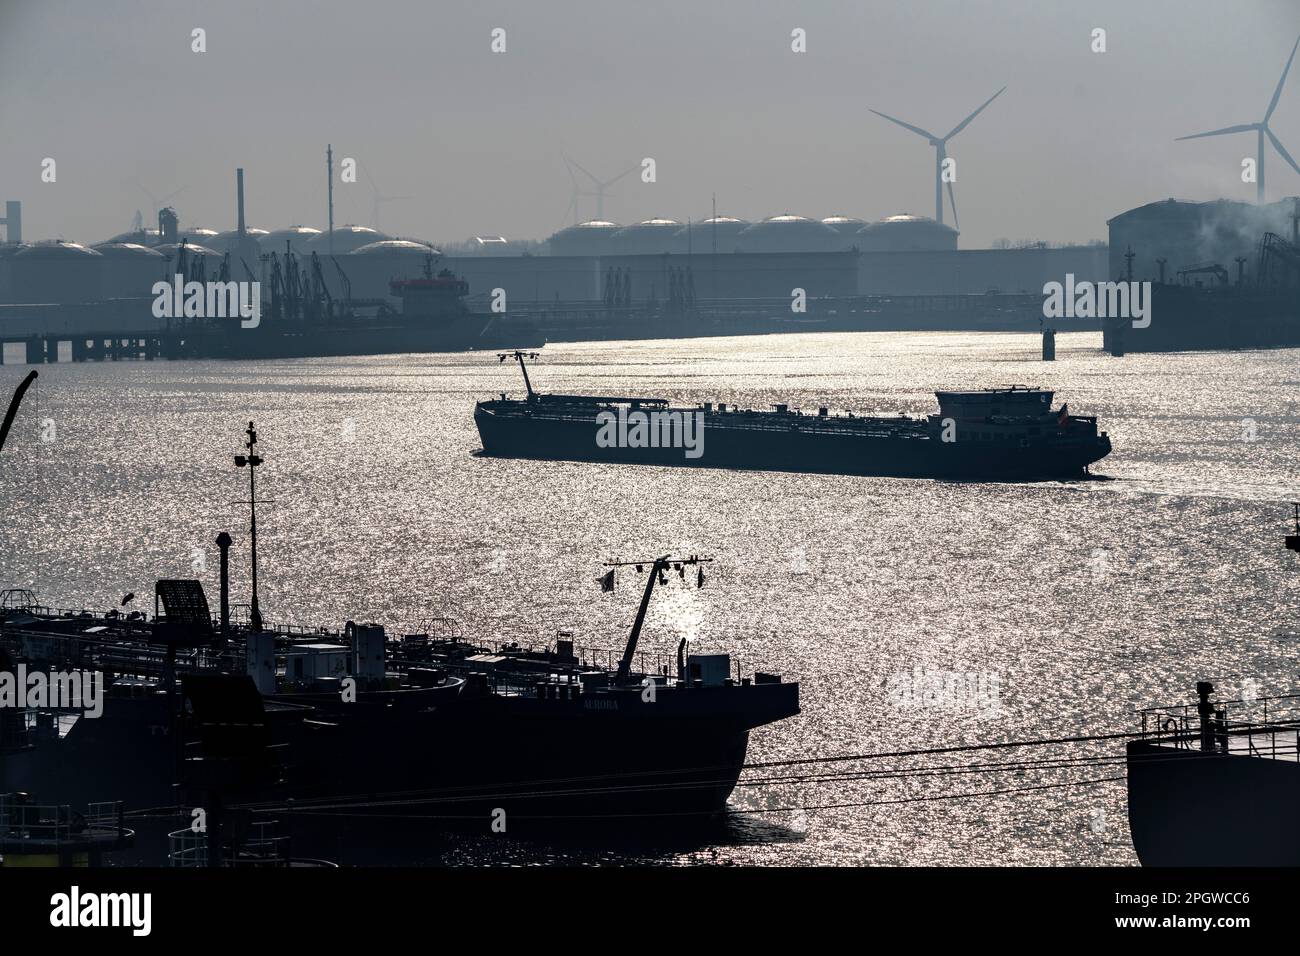 Navi da carico, navi cisterna nel porto marittimo di Rotterdam, nel Petroleumhaven, Europoort, ON, Rotterdam, Paesi Bassi, Foto Stock